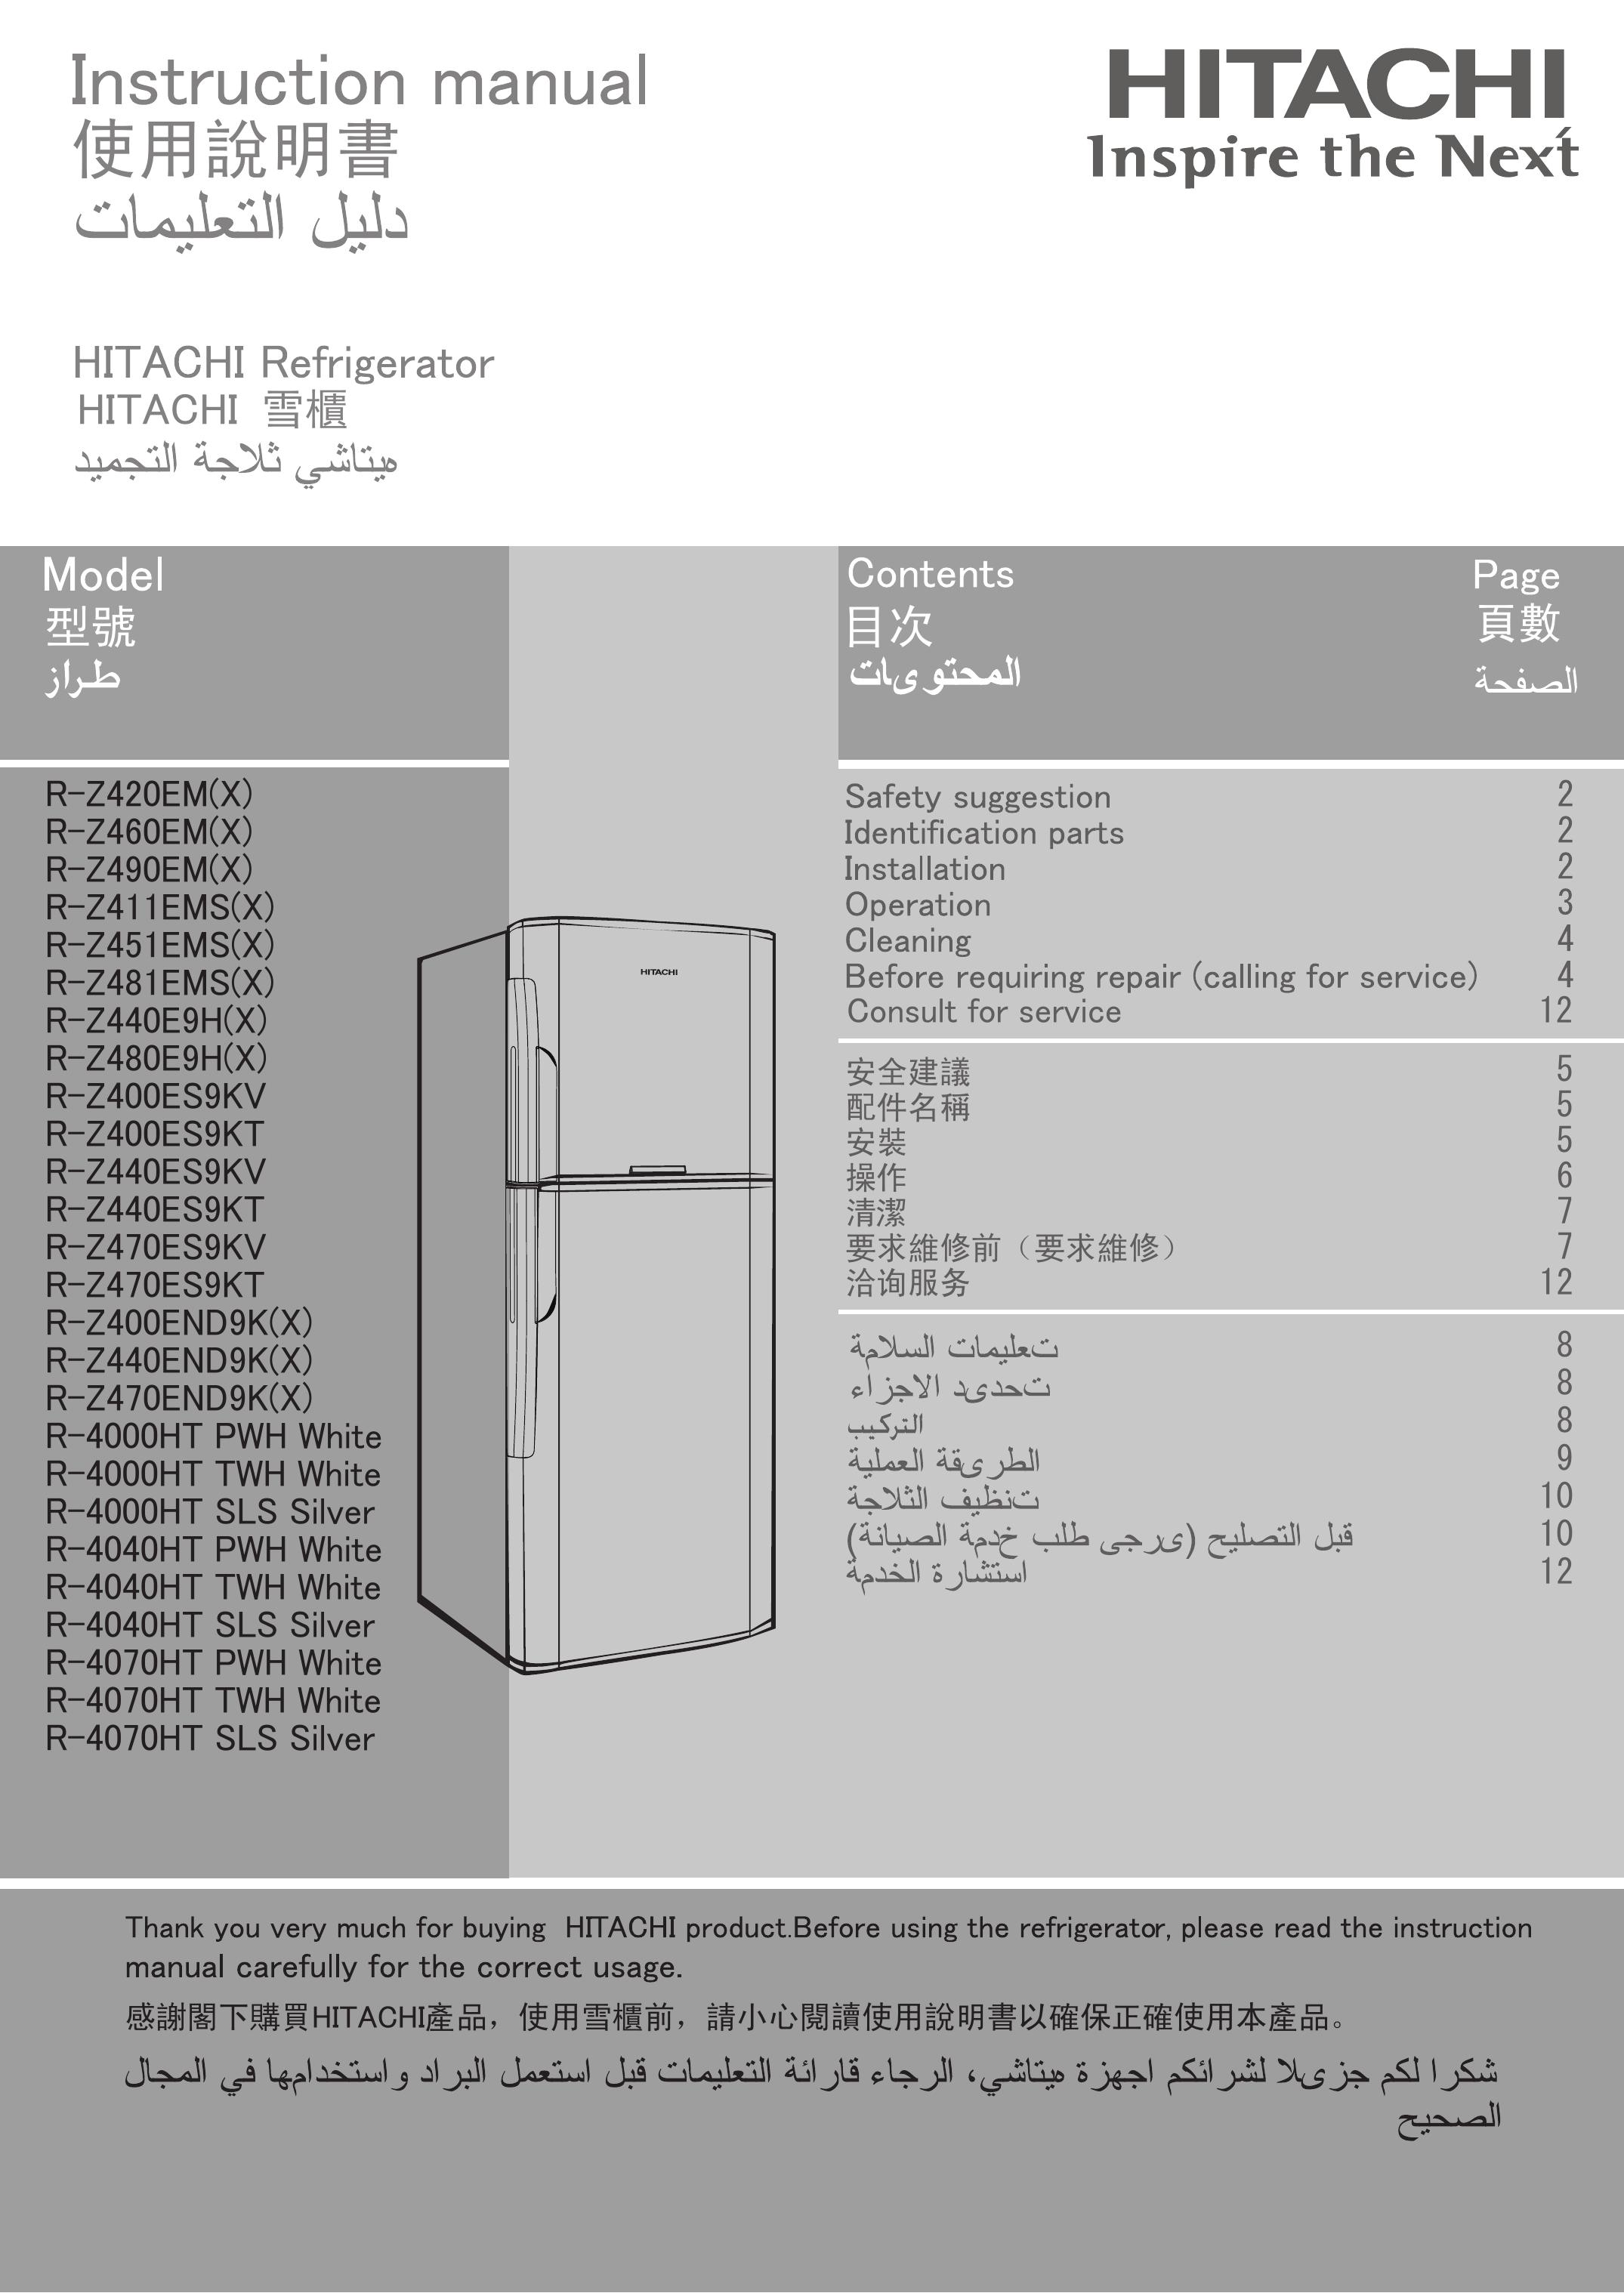 Hitachi R-4000HT TWH White Refrigerator User Manual